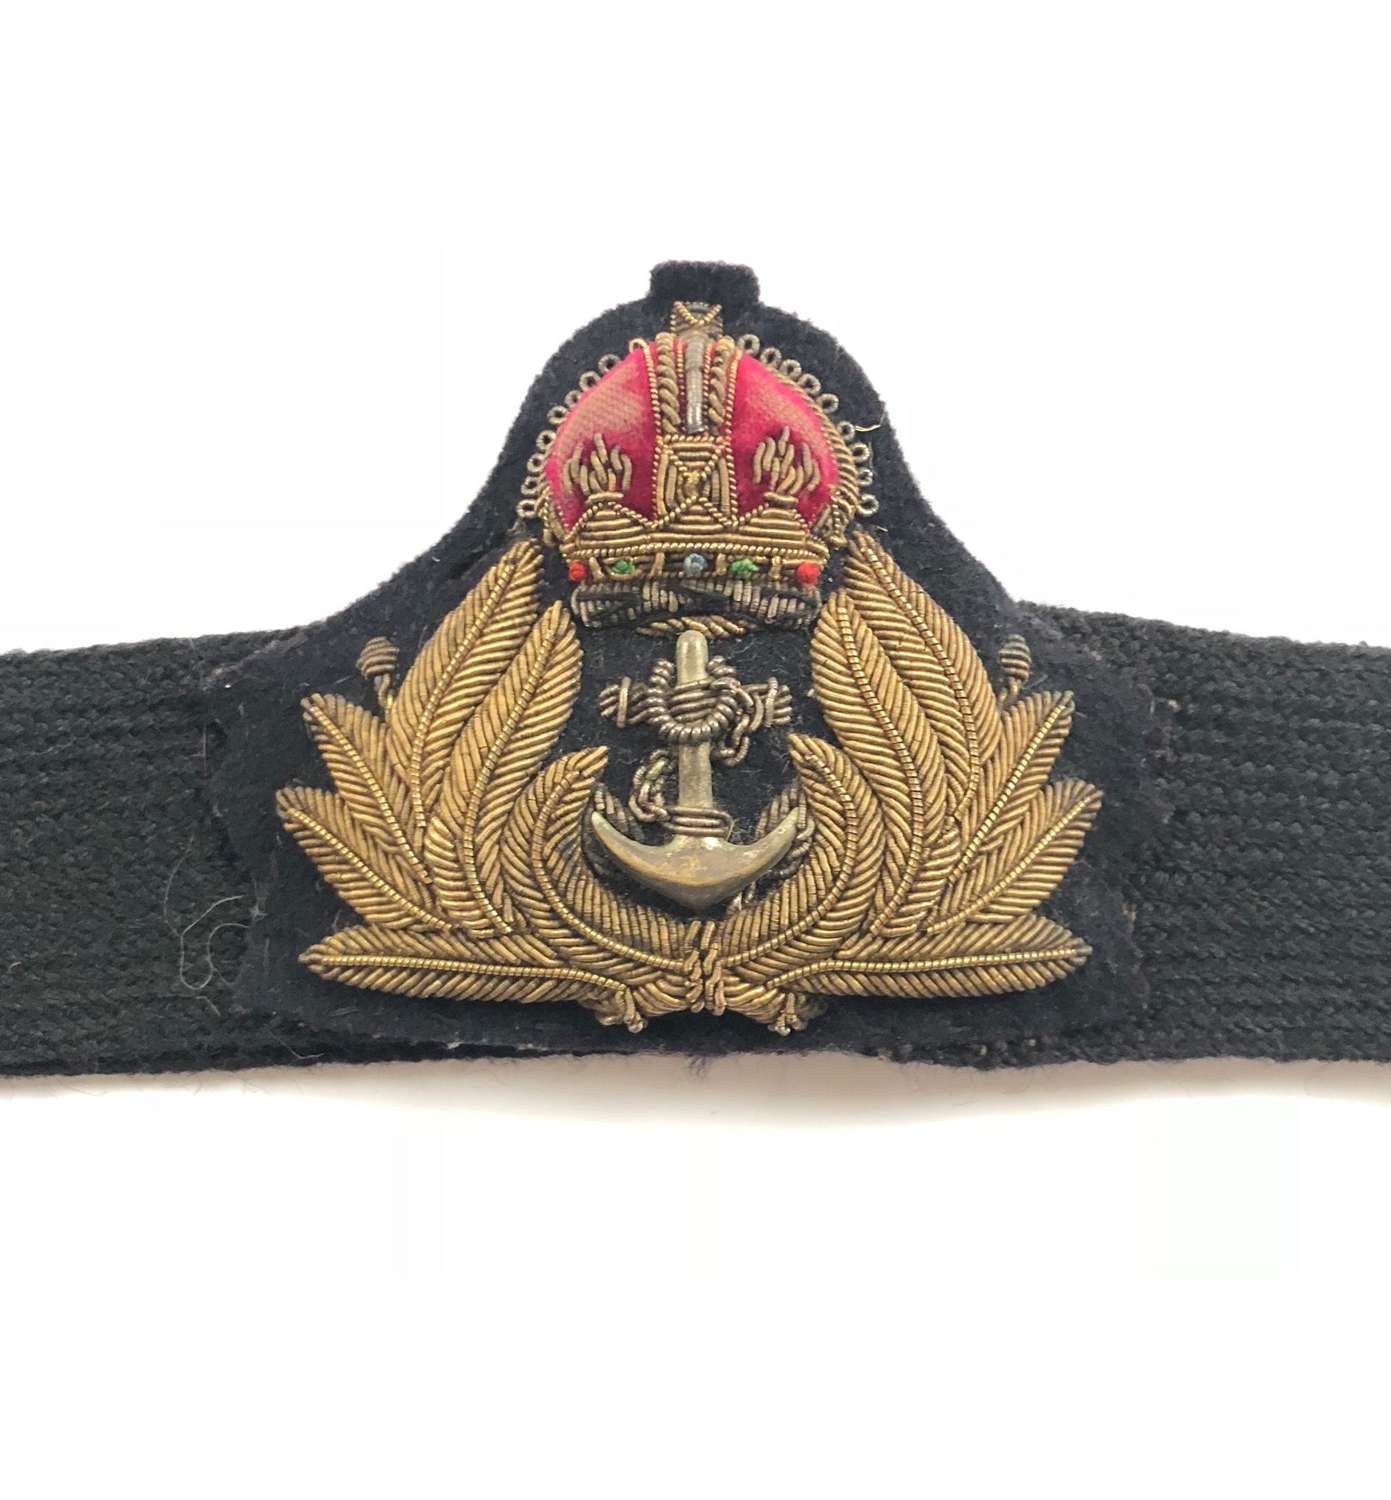 WW2 Period Royal Navy Officer Cap Badge.